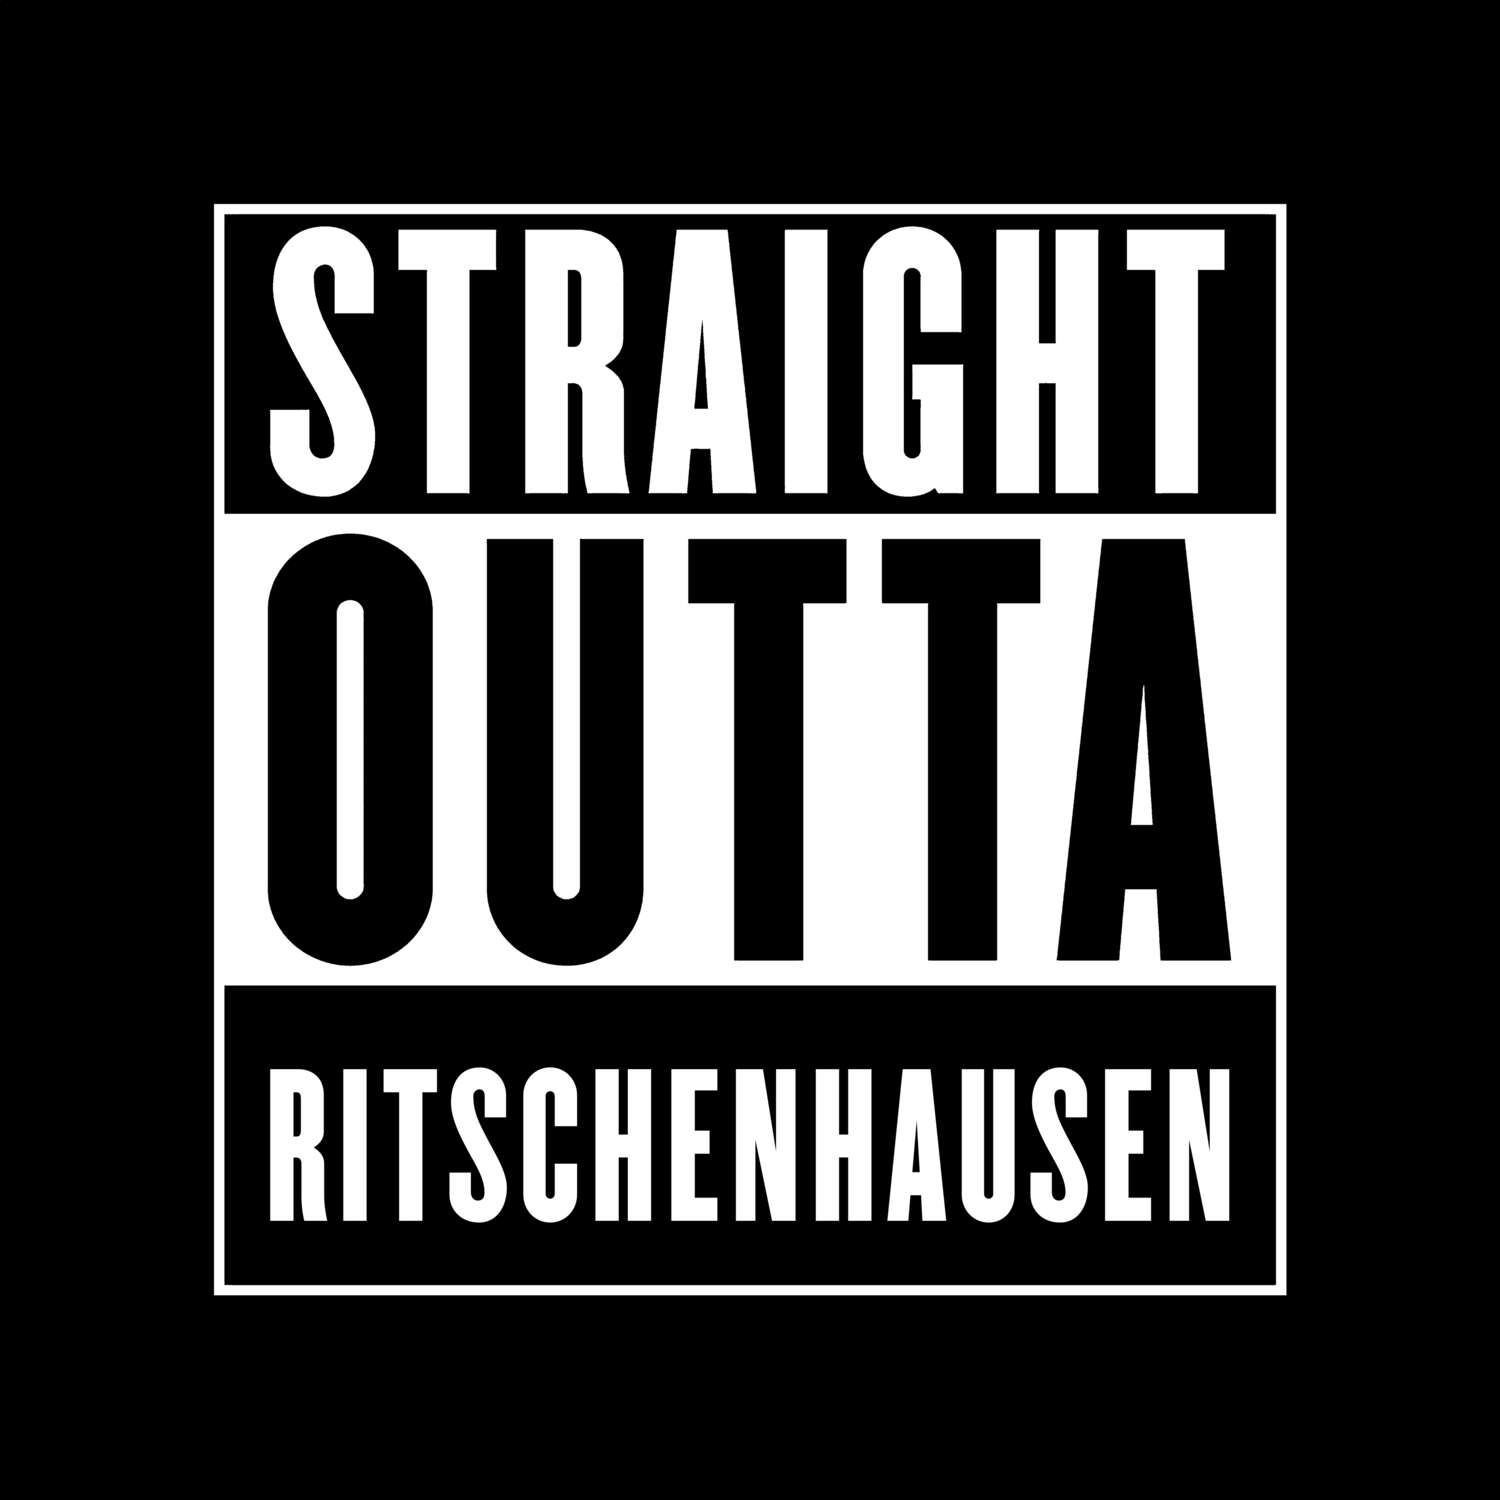 Ritschenhausen T-Shirt »Straight Outta«